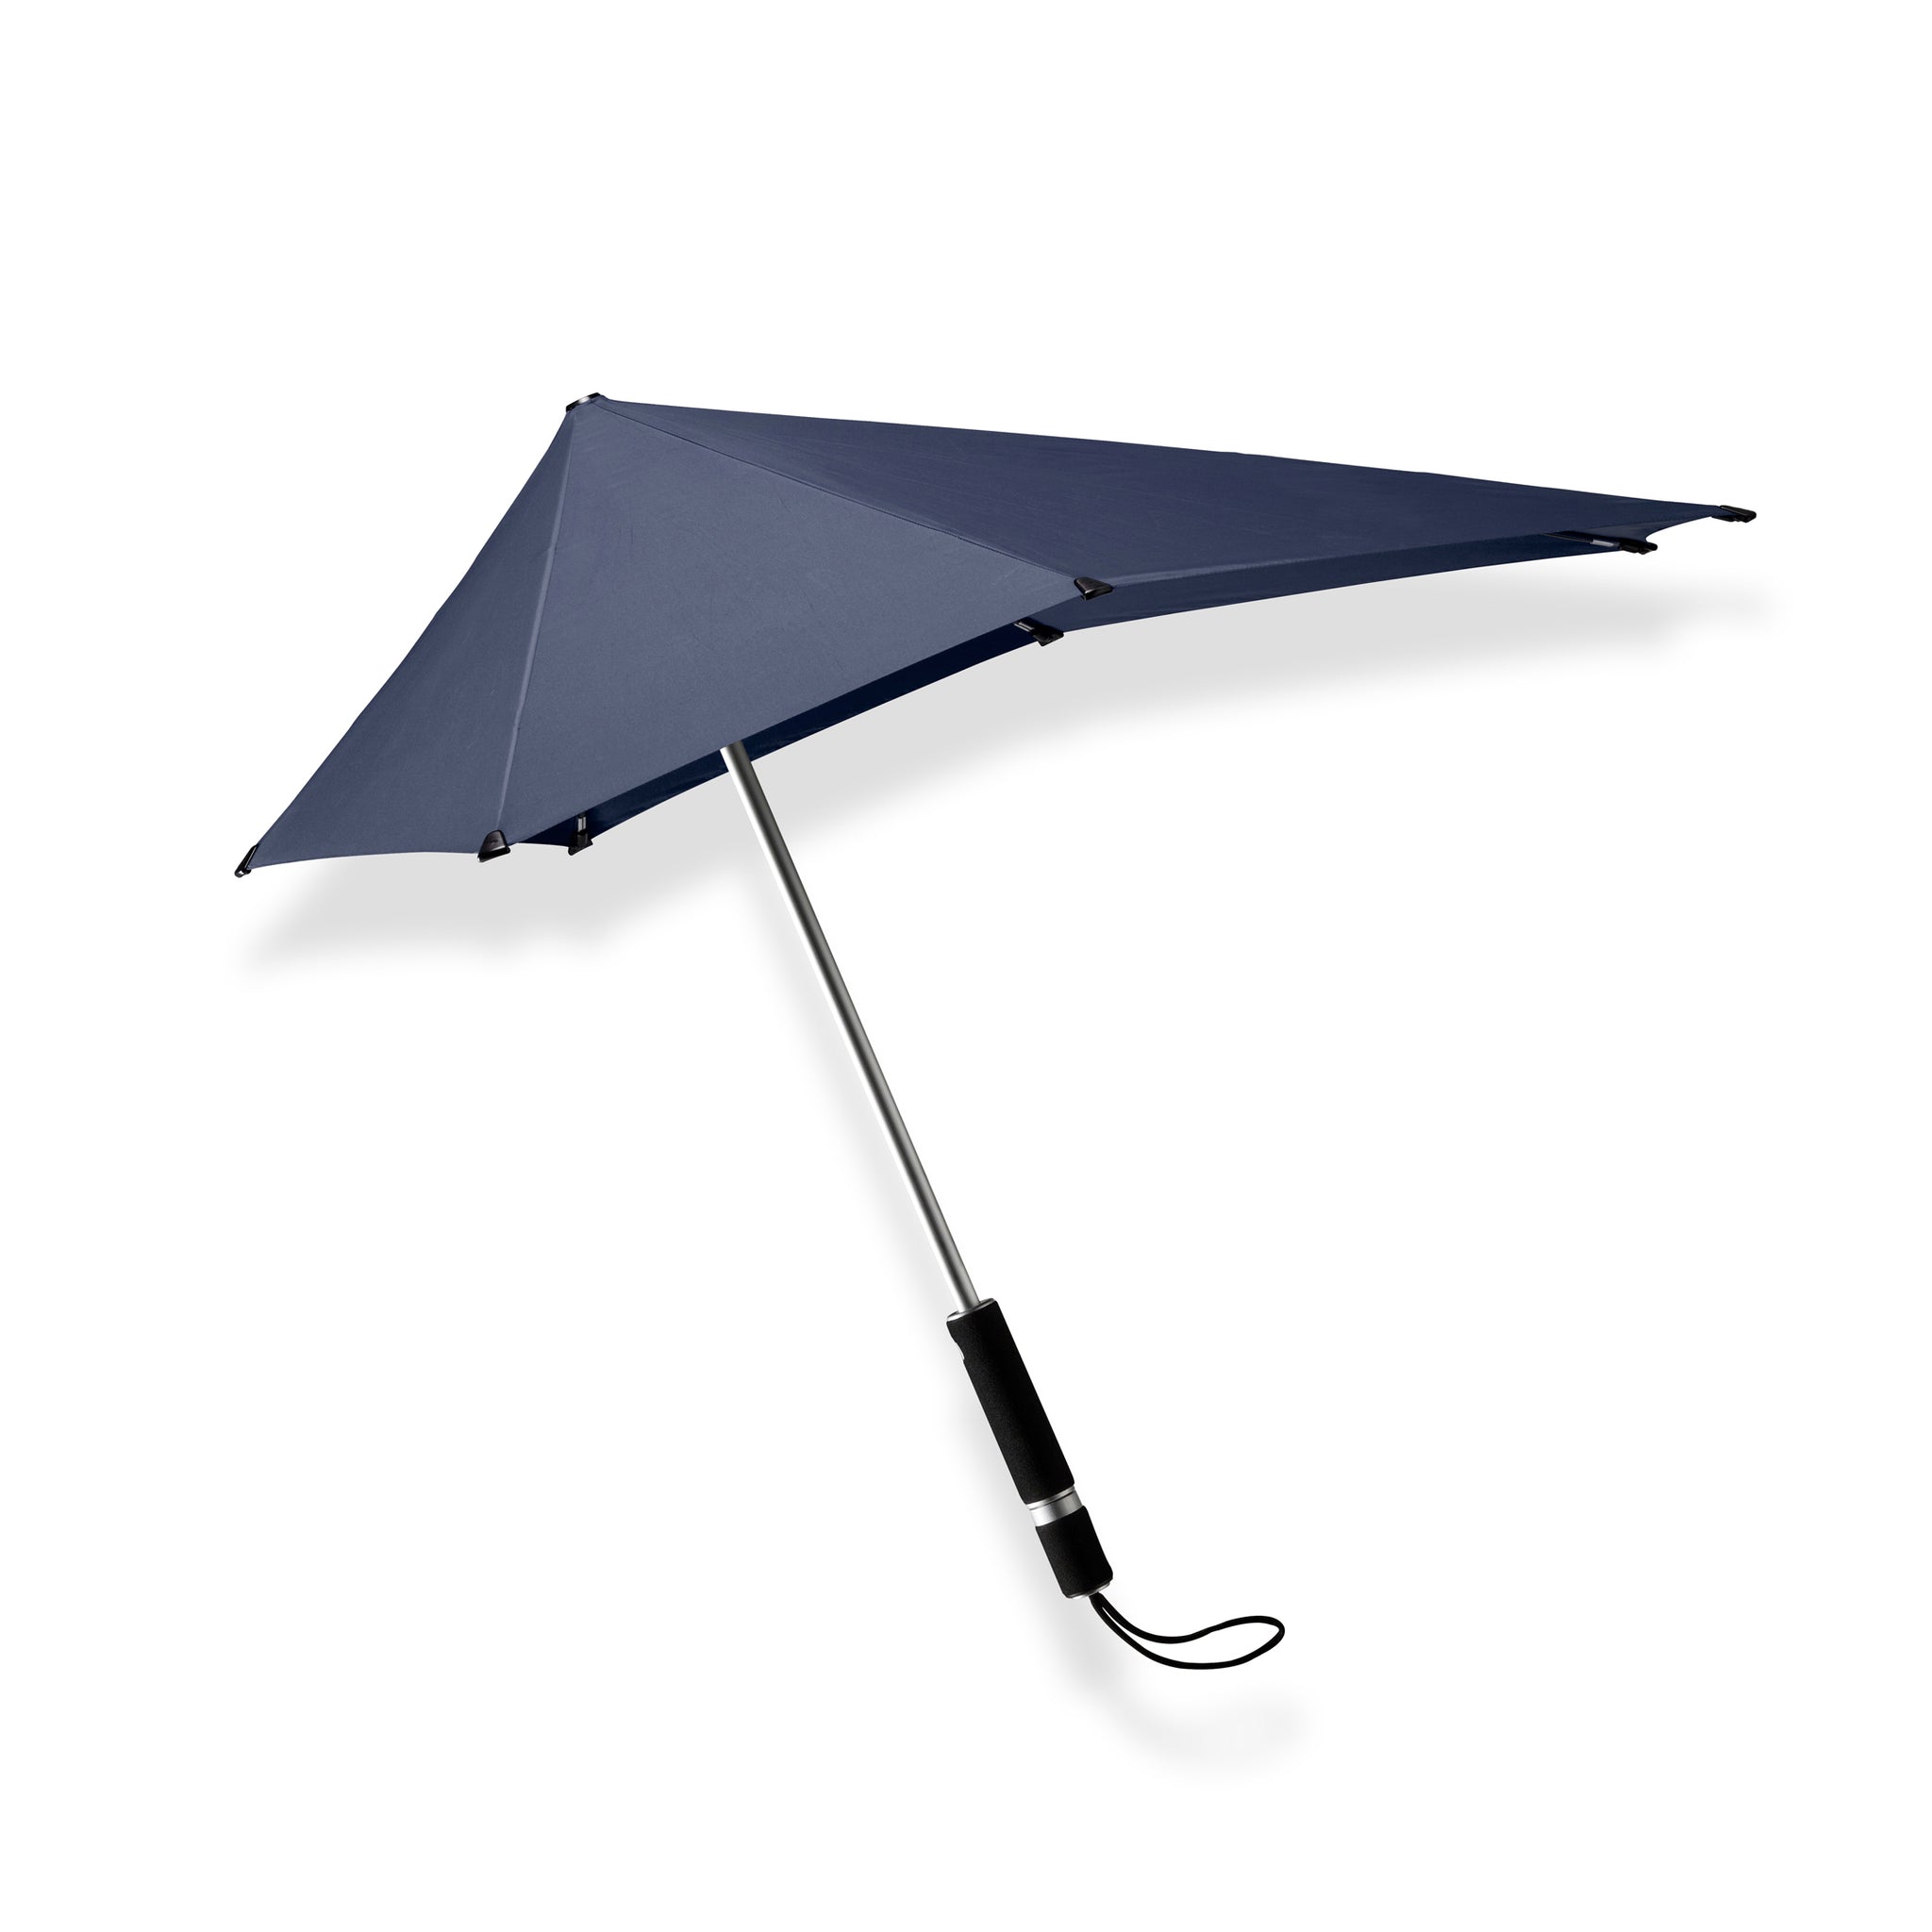 Senz Paraplu Original│Midnight Blue│Storm Paraplu│product foto zijkant open